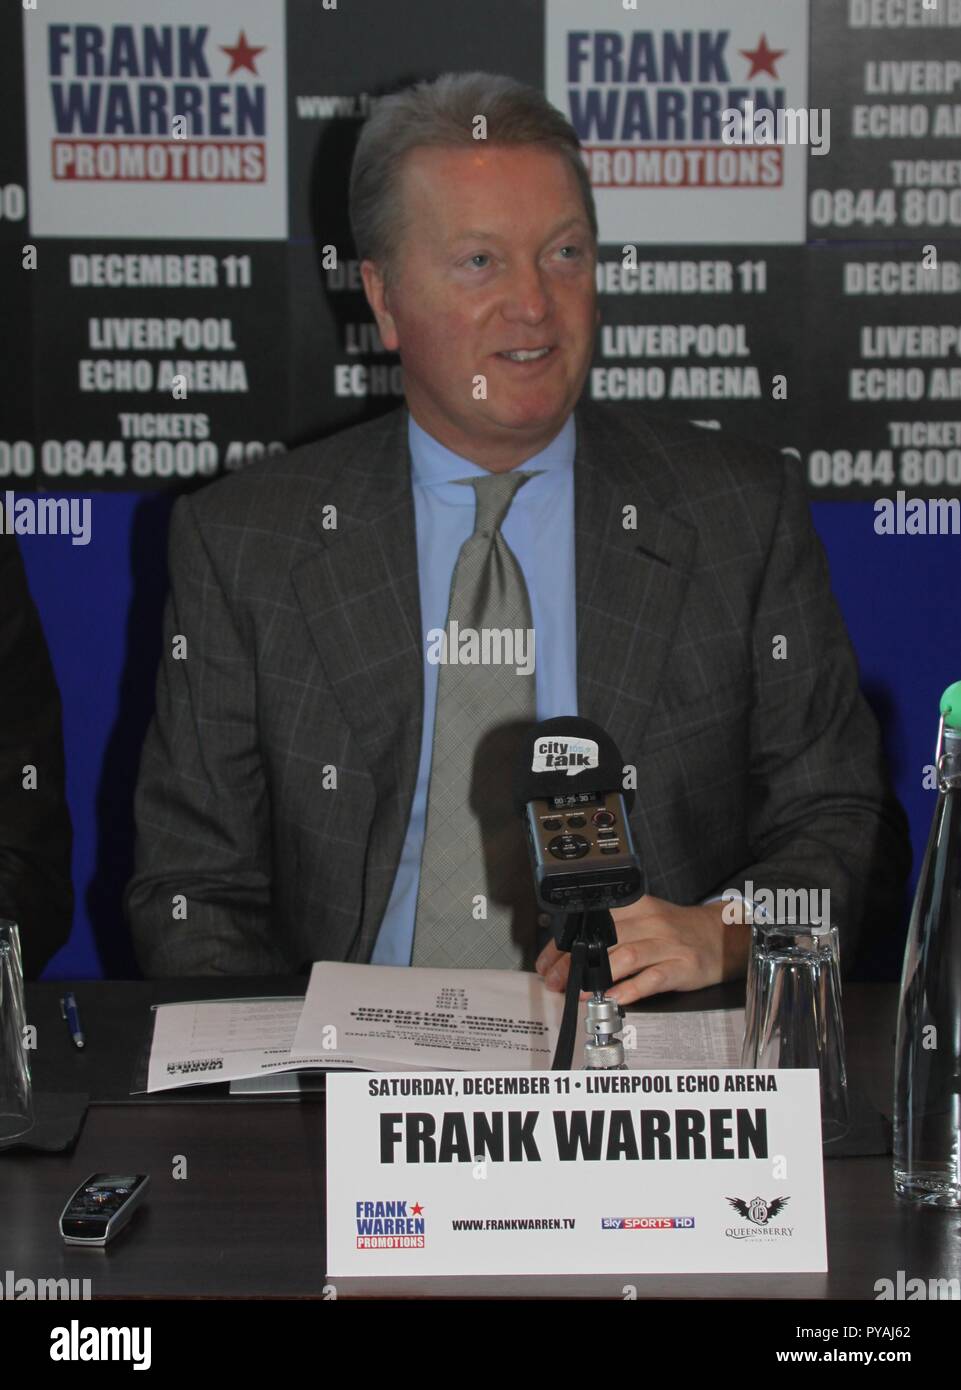 Liverpool,Uk Boxing promoter frank warren attend press conferance credit Ian Fairbrother/Alamy Stock Photos Stock Photo